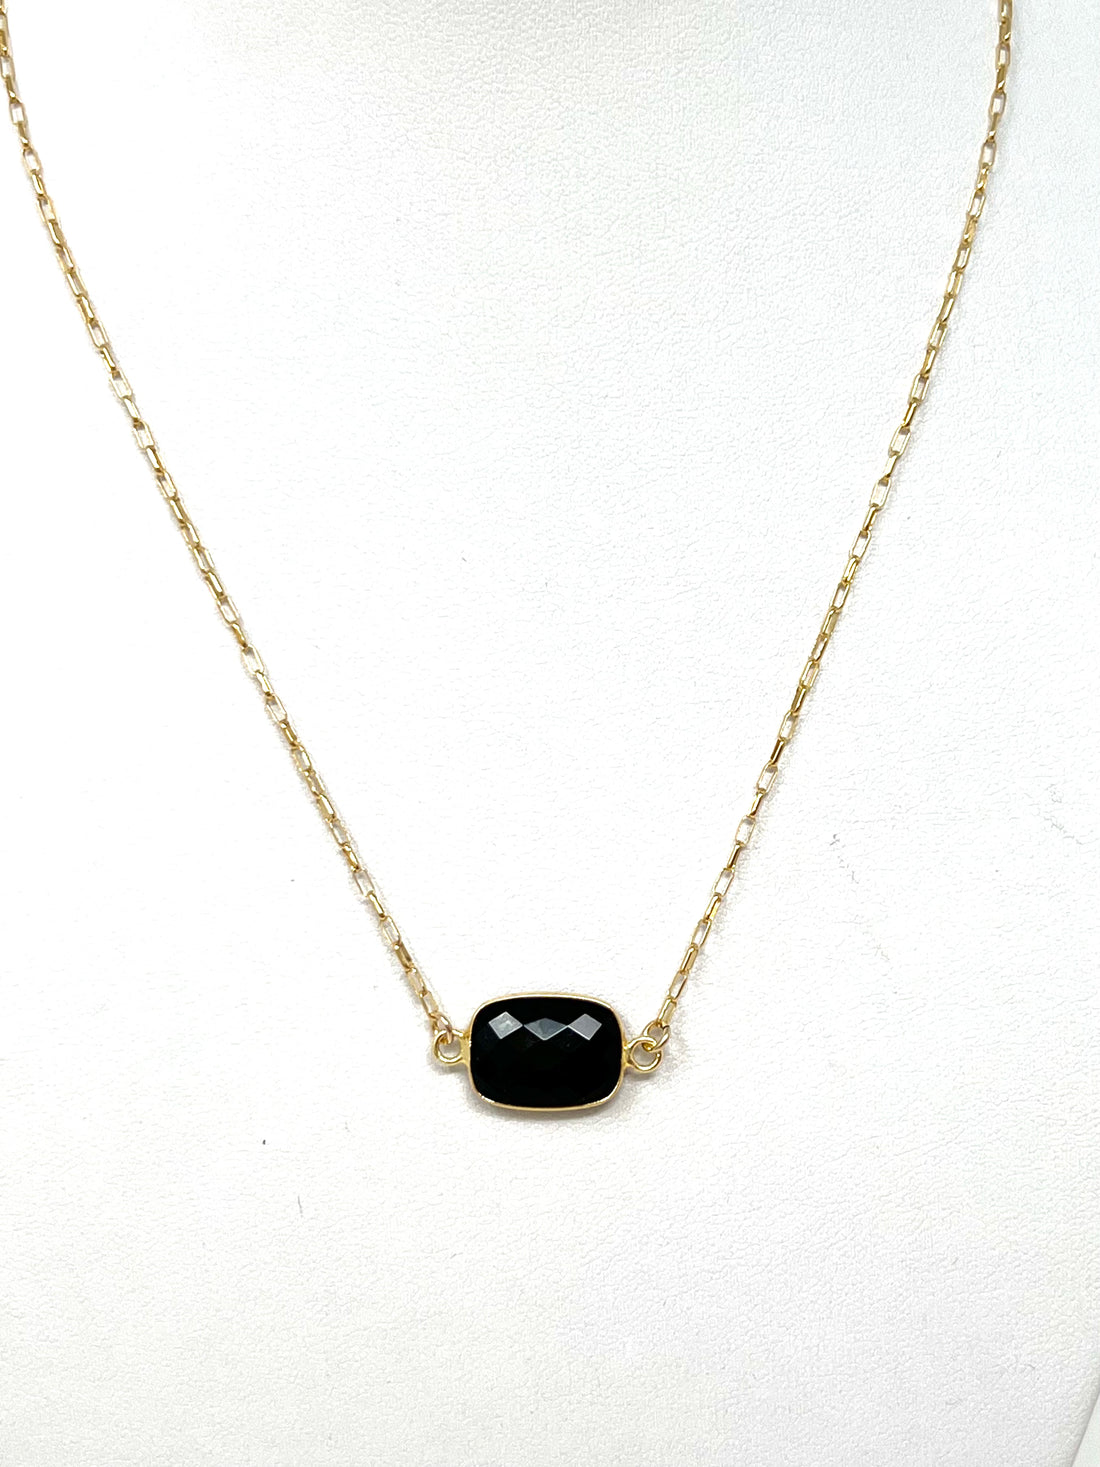 Sideways Necklace in Black Onyx